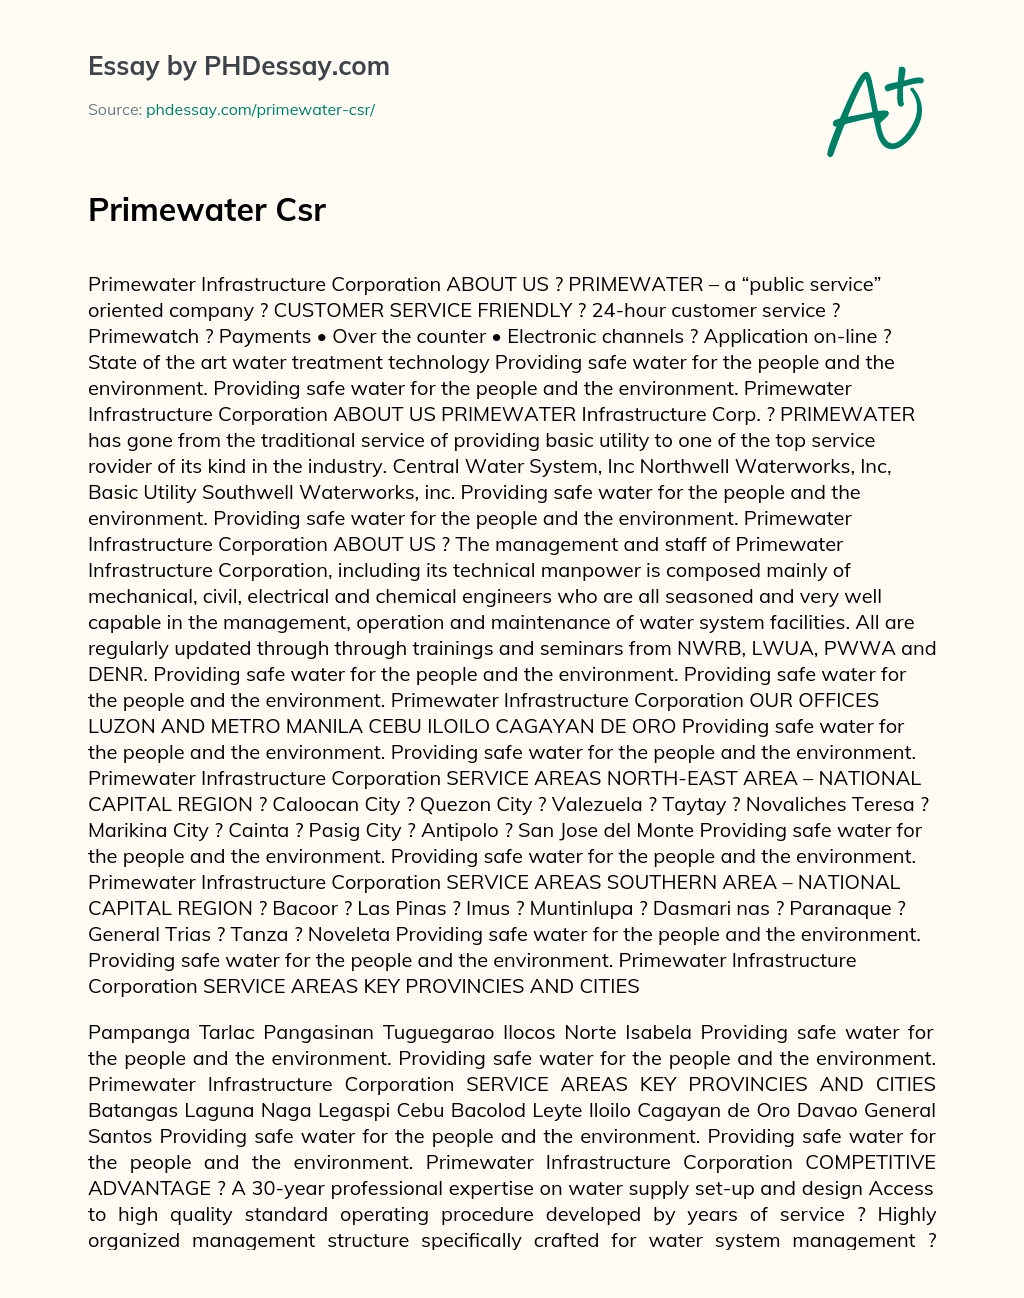 Primewater Csr essay